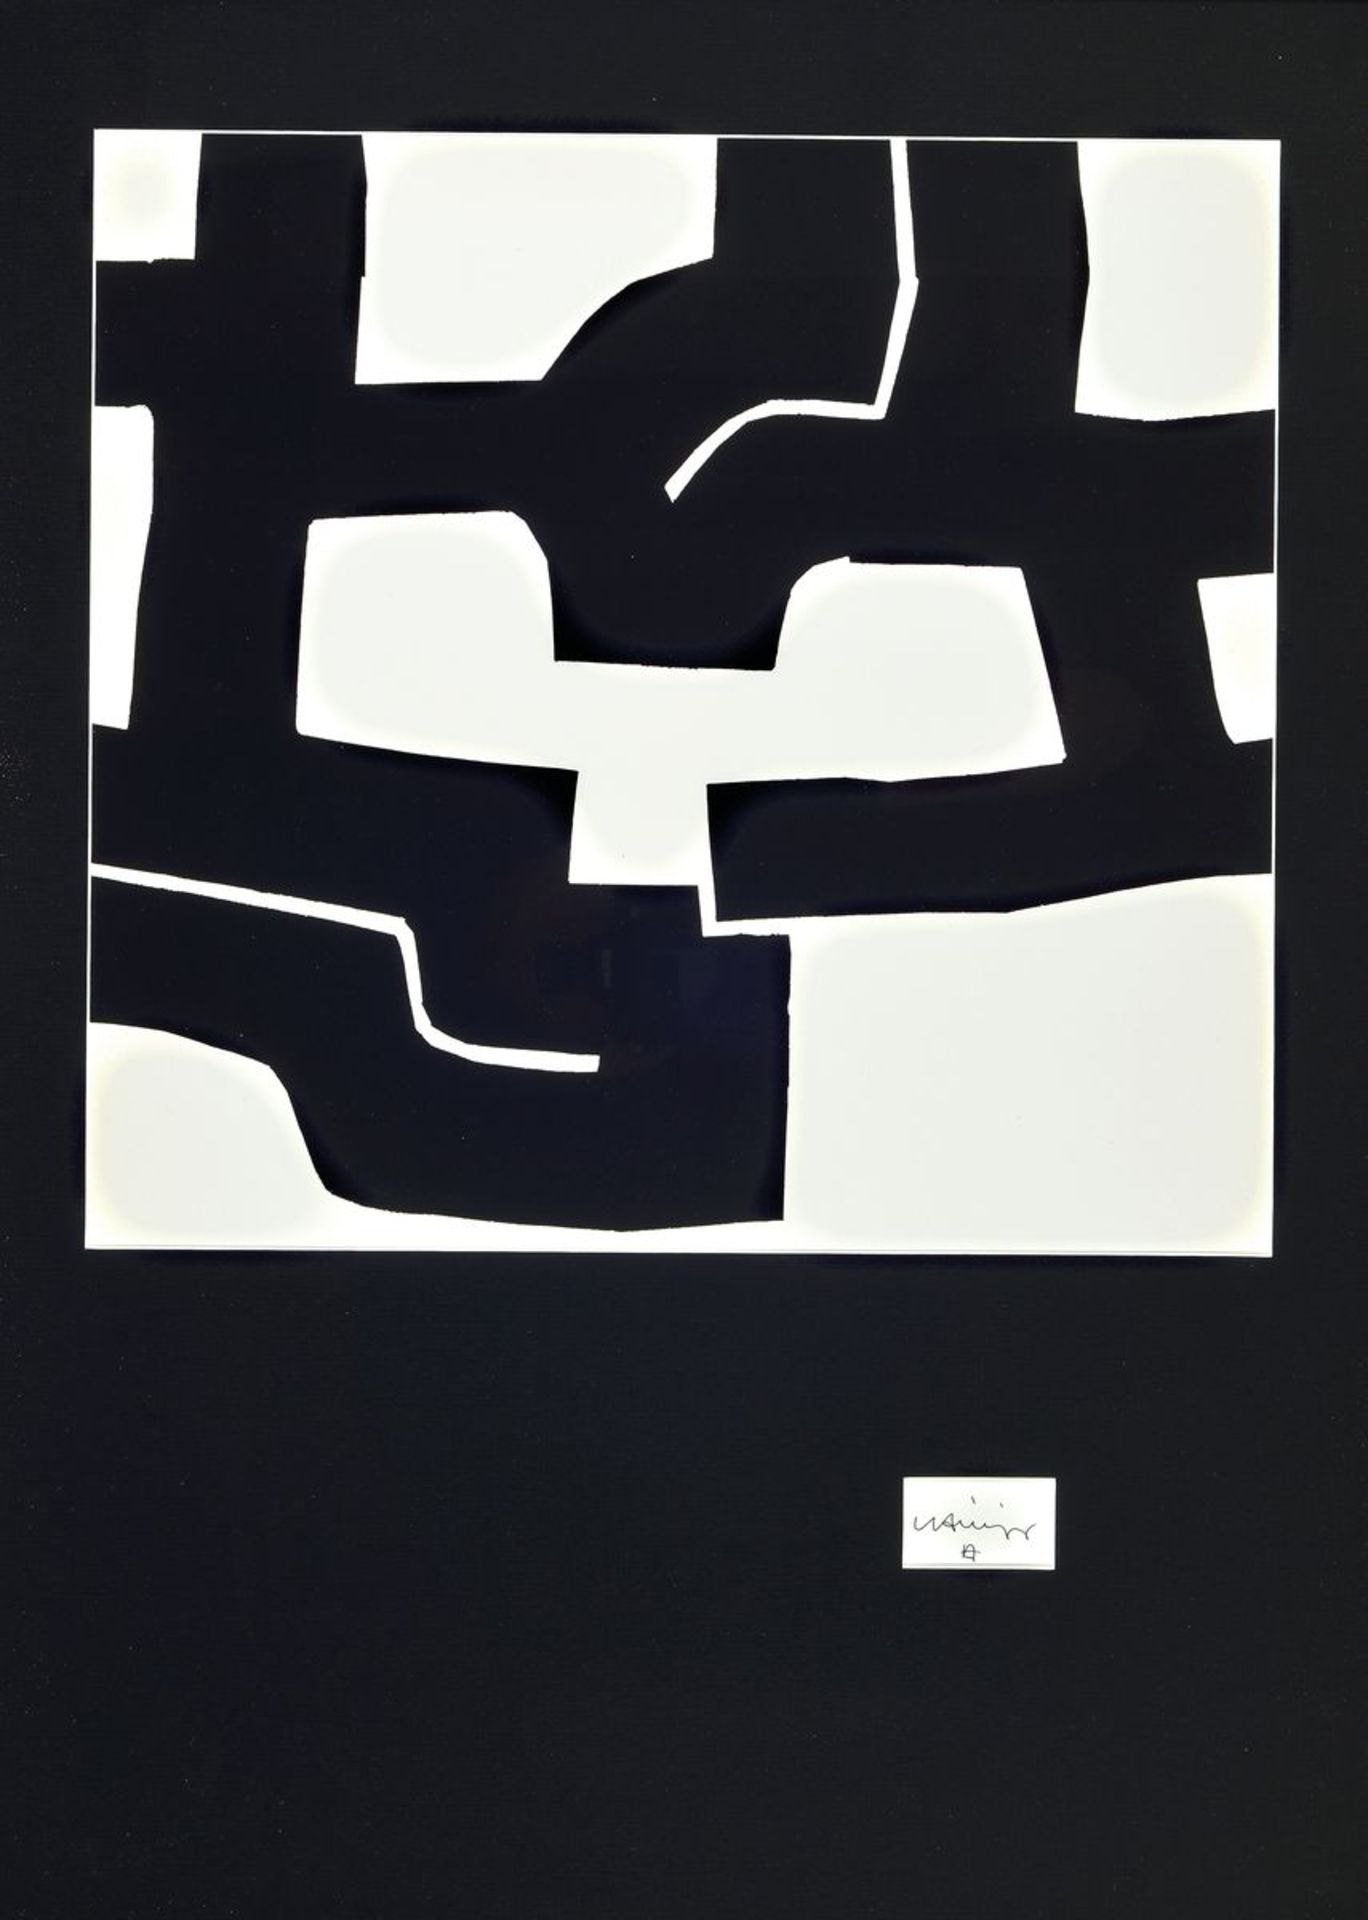 Eduardo Chillida, 1924-2002, screenprint, handsigned, sheet size 64 x 42 cm, published by Galerie